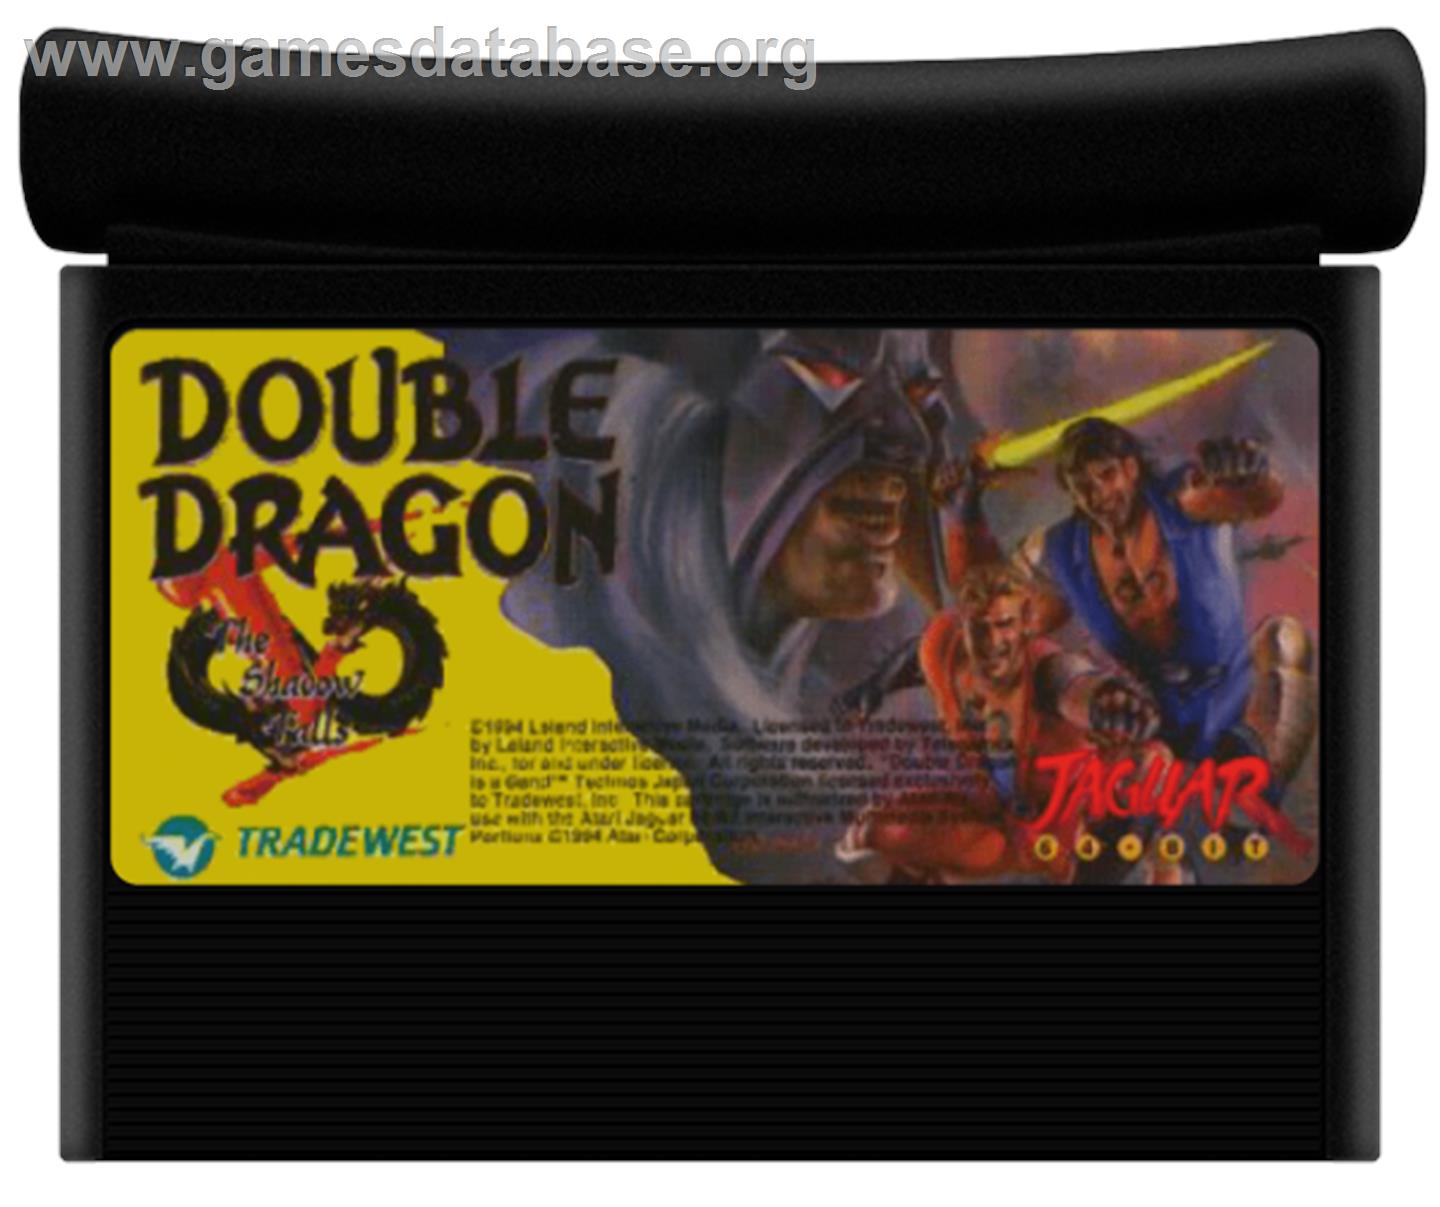 Double Dragon V: The Shadow Falls - Atari Jaguar - Artwork - Cartridge